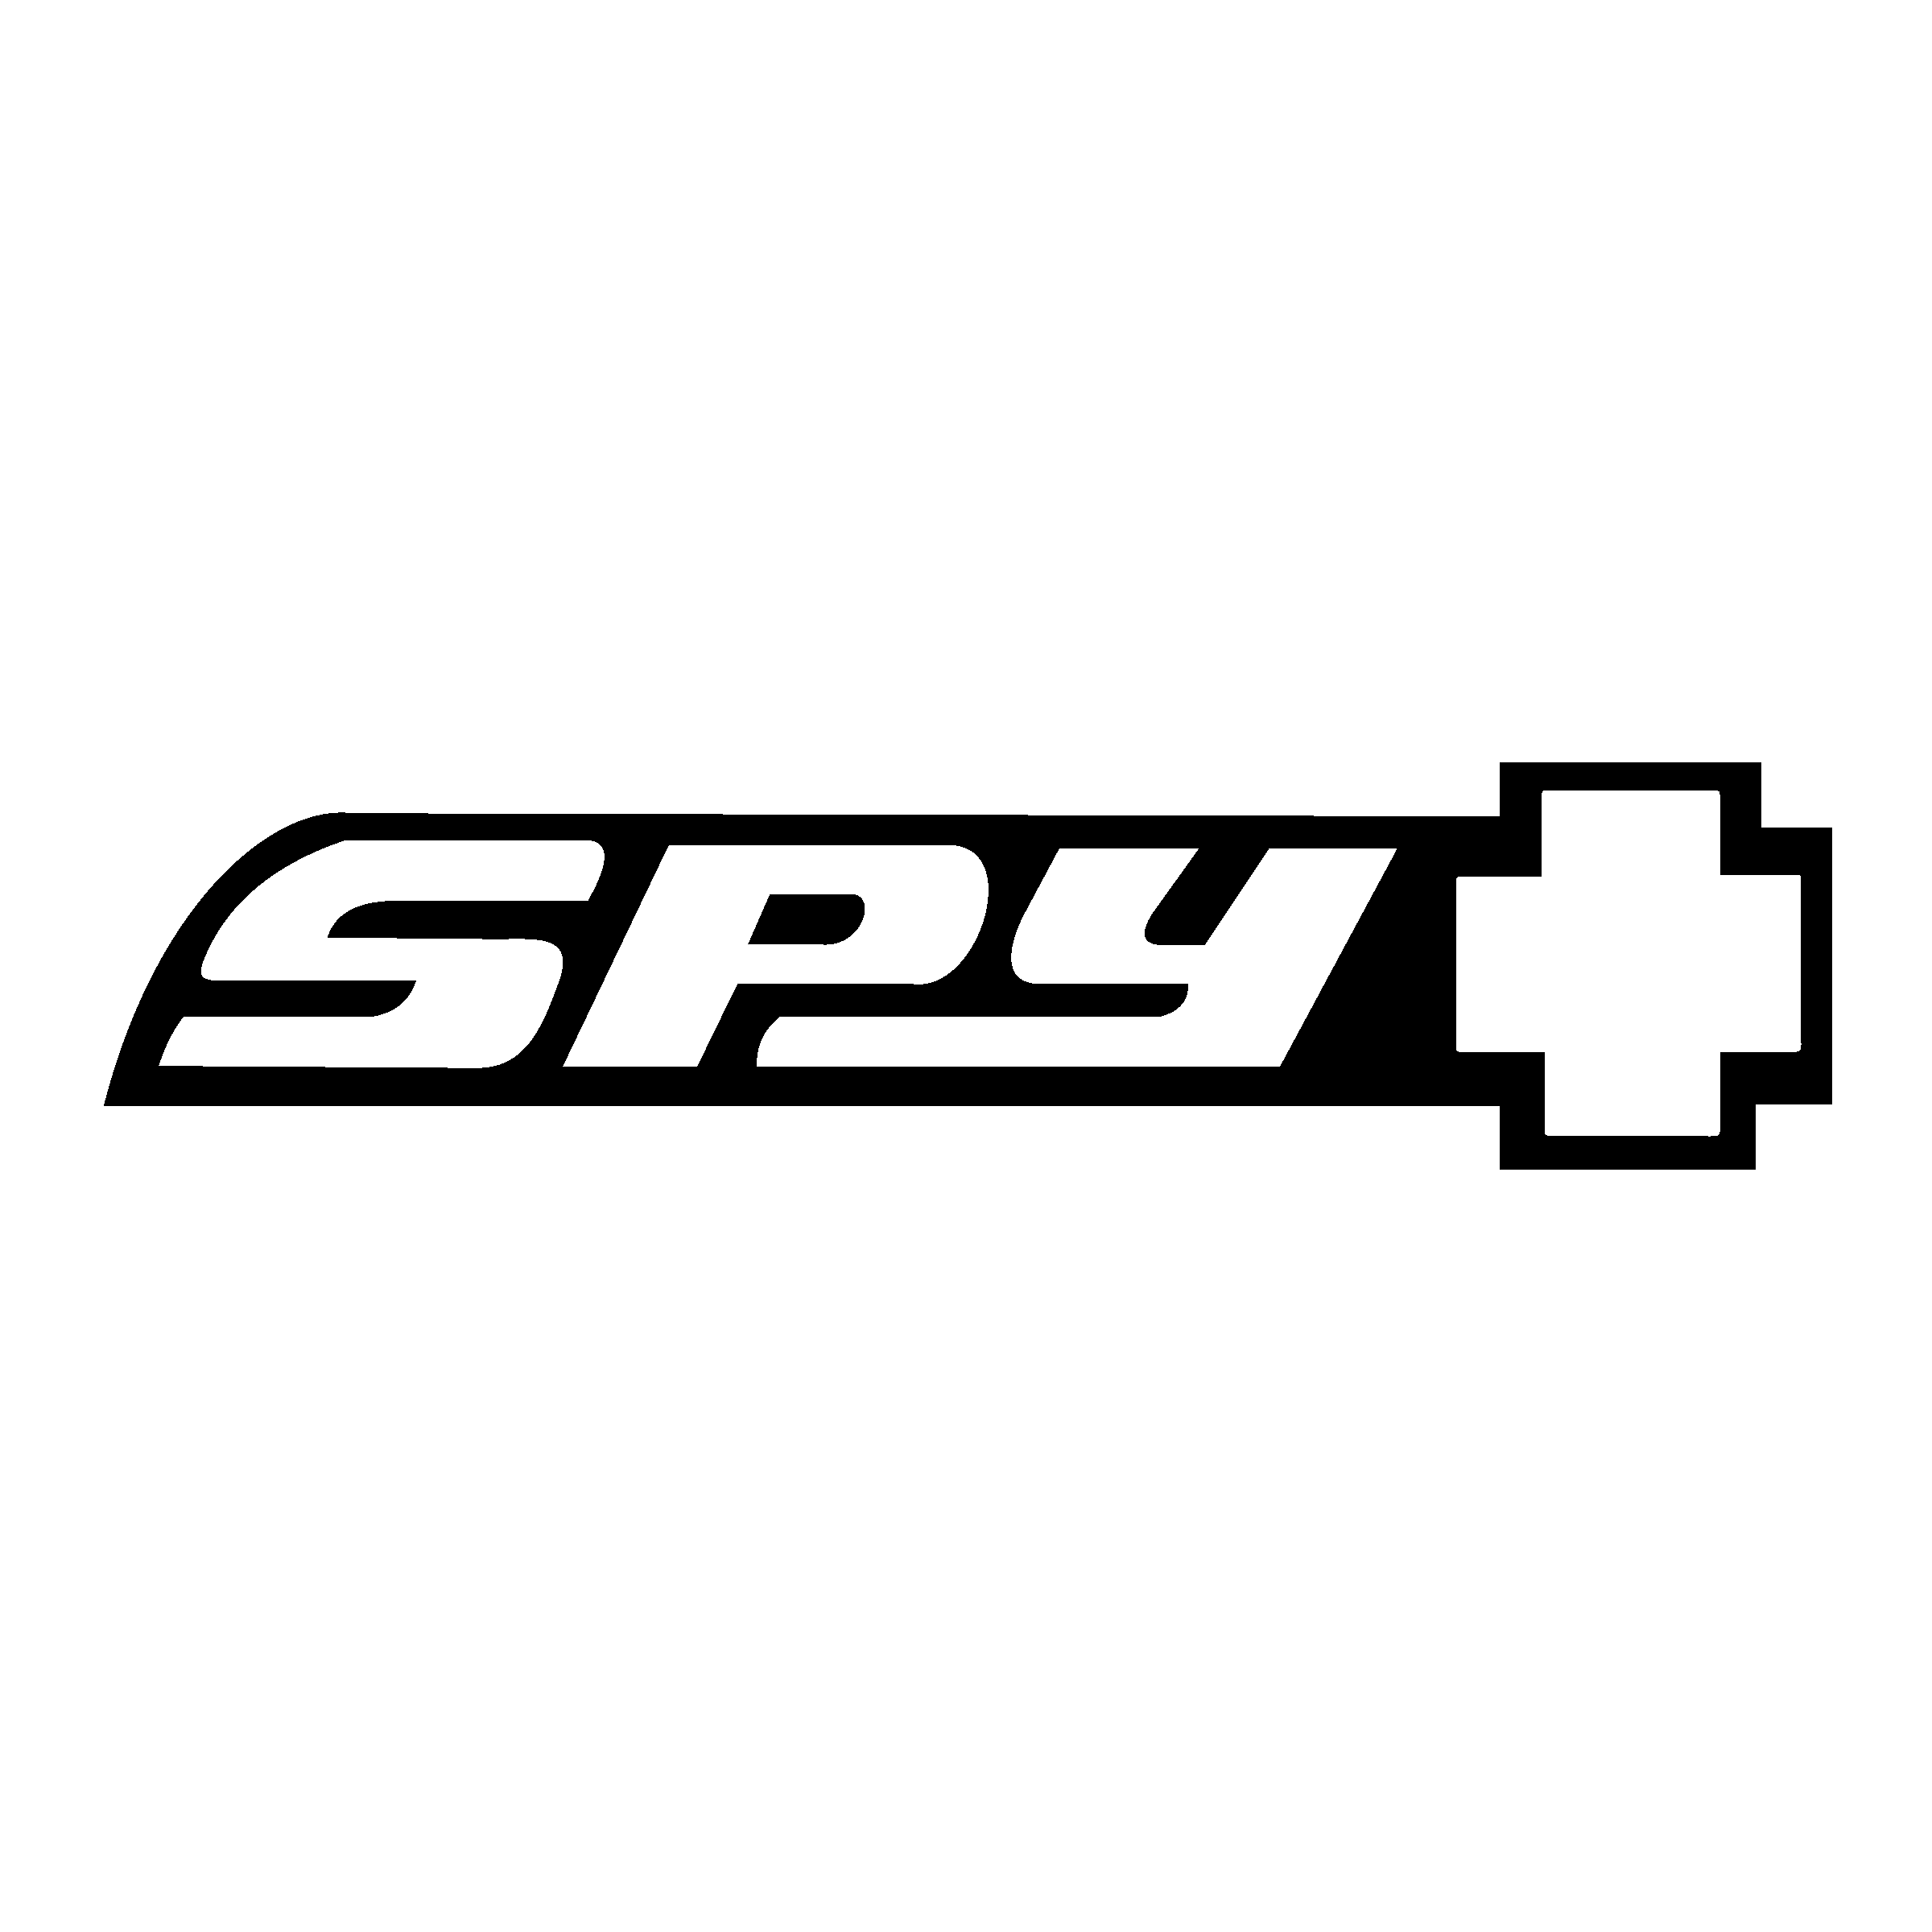 Black Spy Logo - Spy Logo PNG Transparent & SVG Vector - Freebie Supply